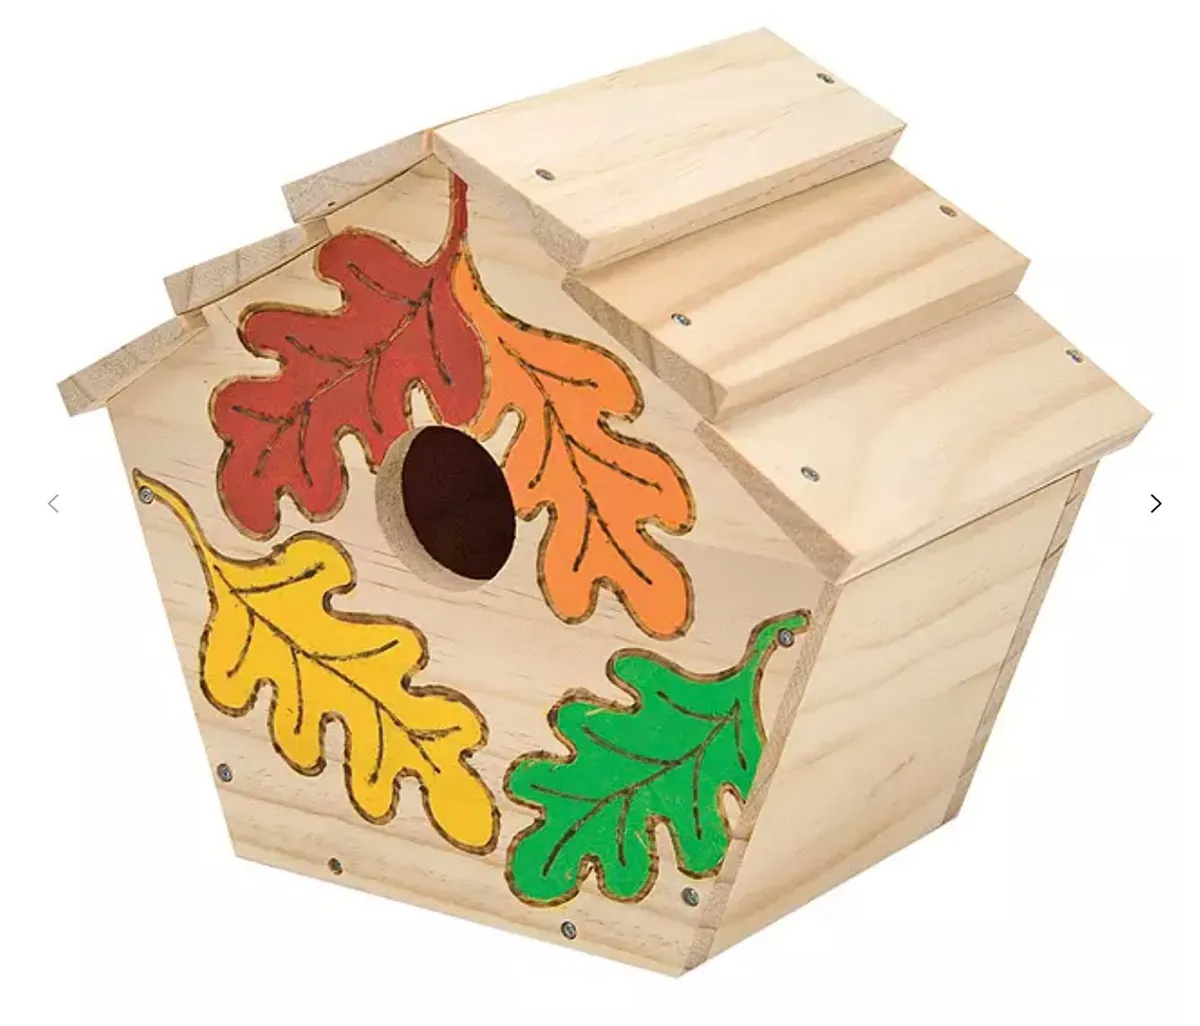 https://c02.purpledshub.com/uploads/sites/51/2021/08/art-sets-for-kids-build-your-own-birdhouse-4641d9f.jpg?webp=1&w=1200